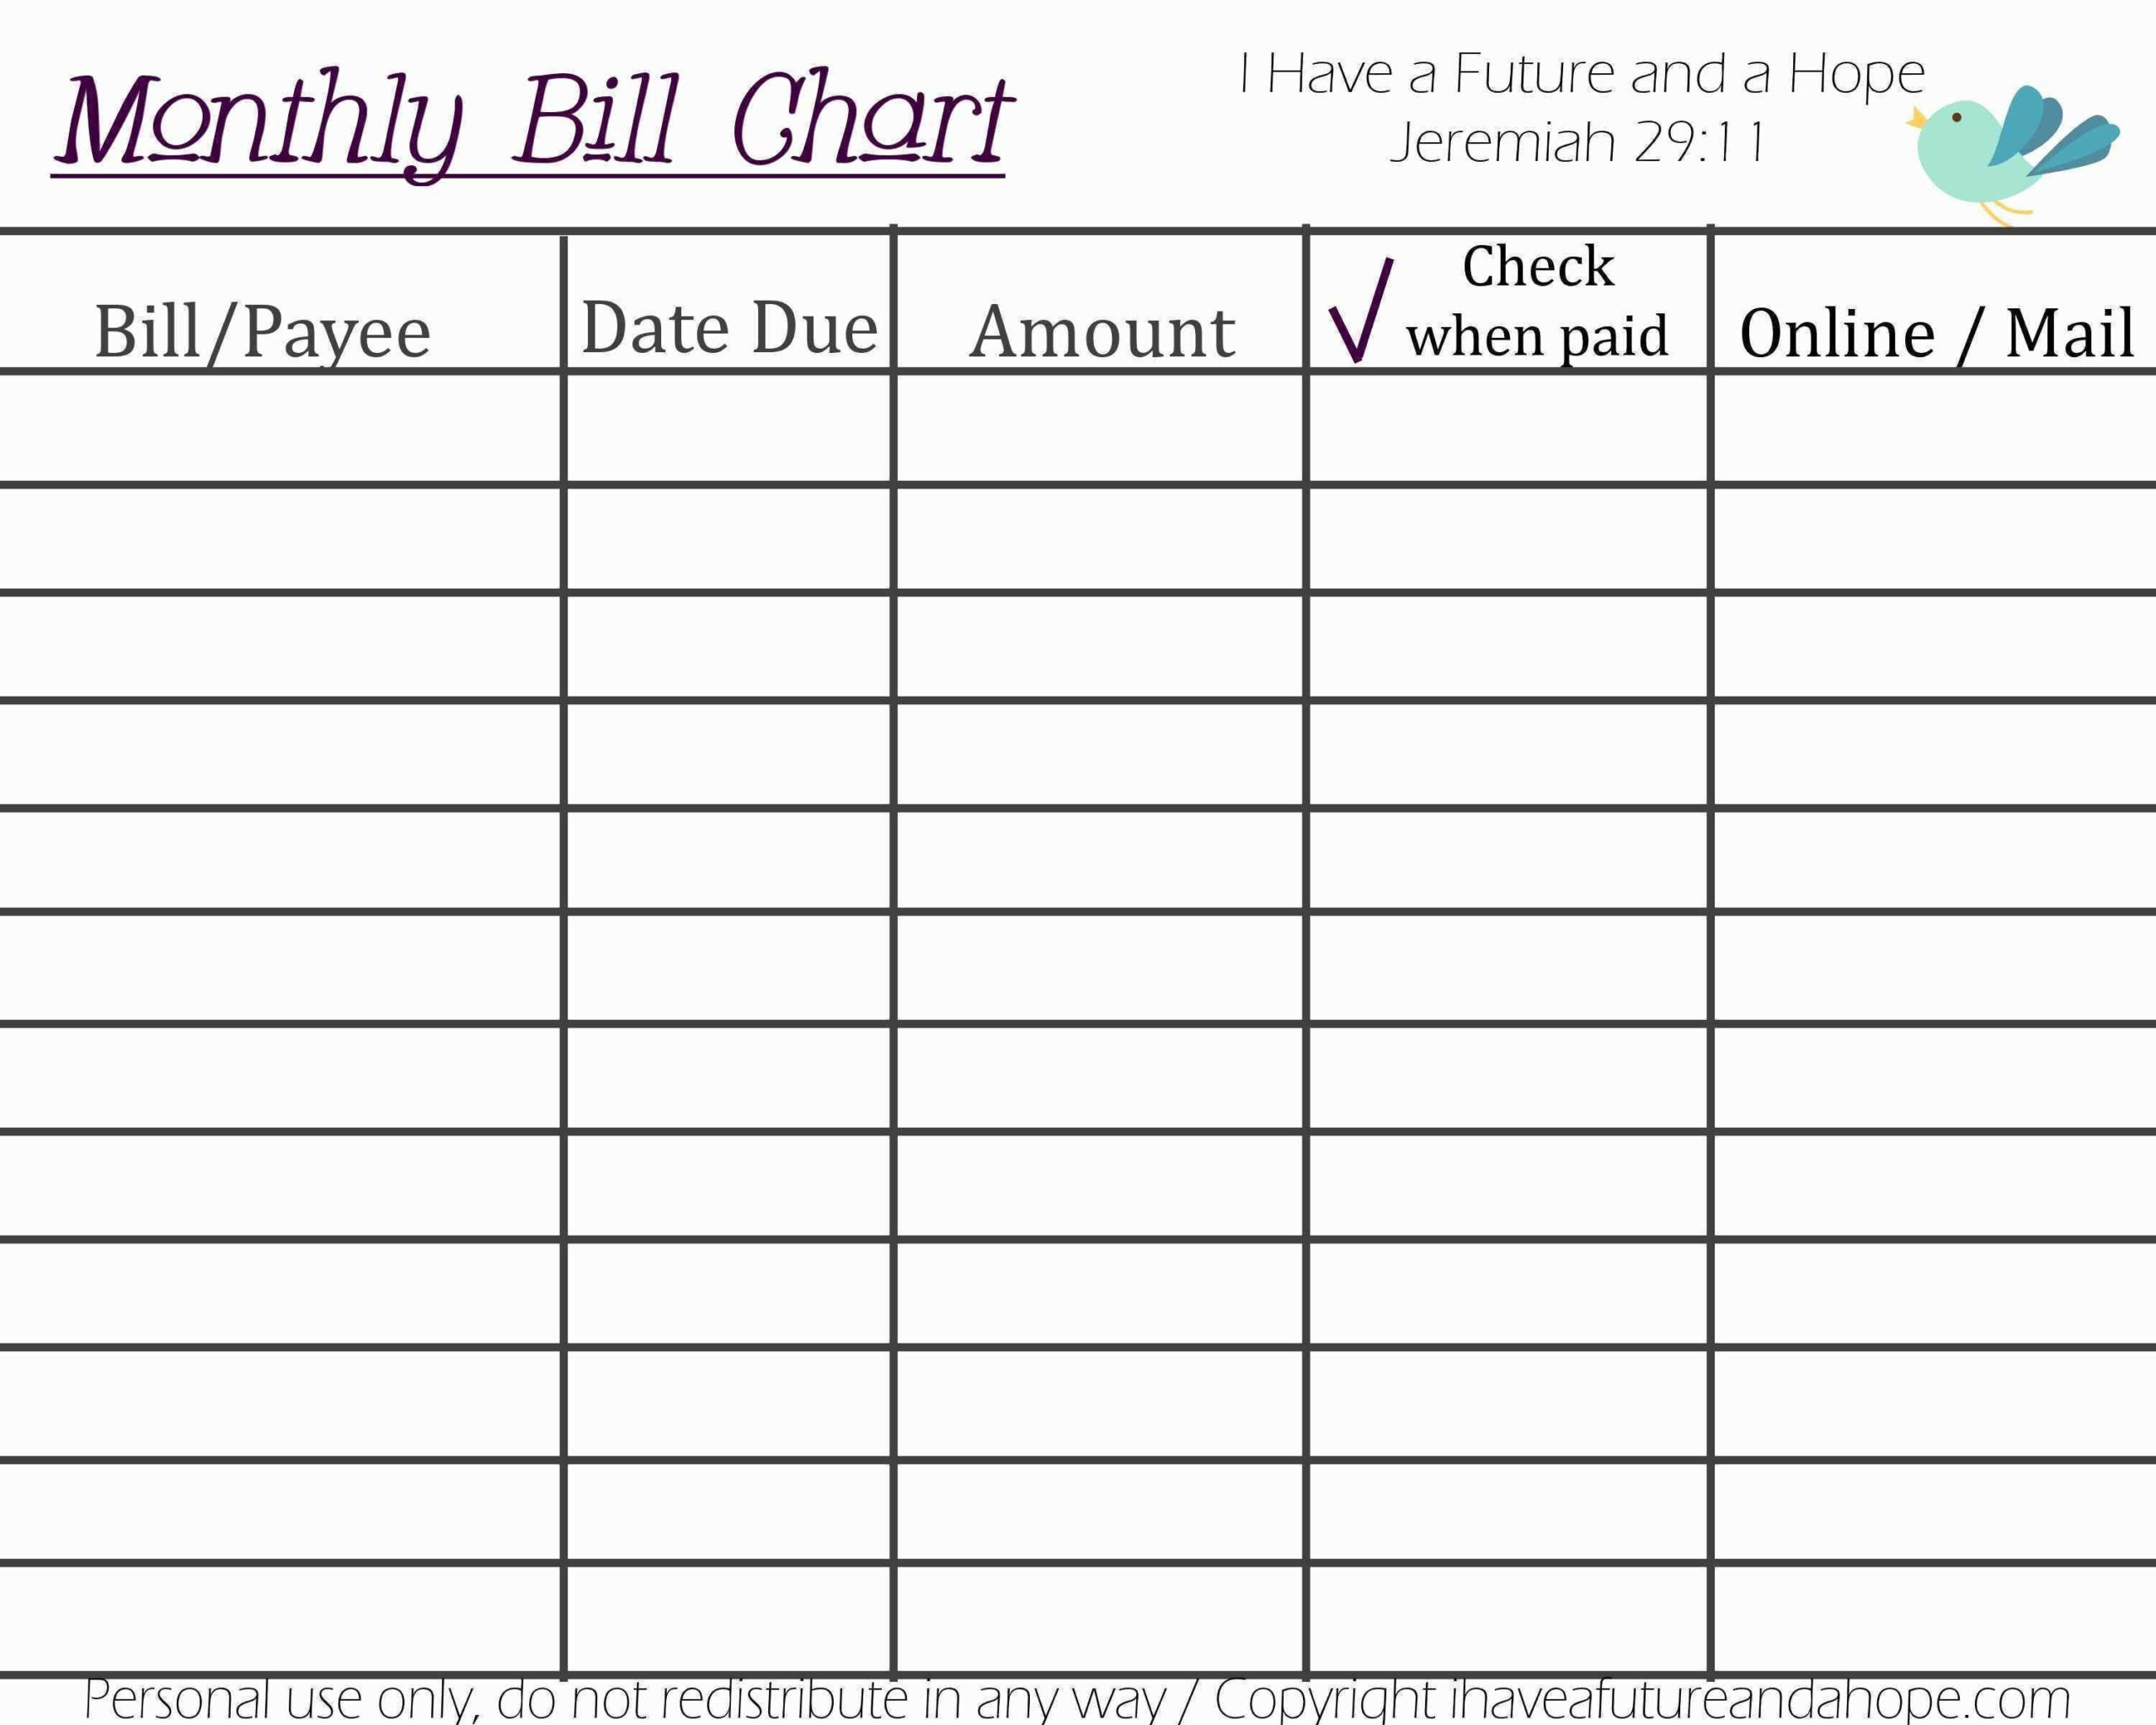 Monthly Bill Calendar Template Fresh Bill Calendar intended for Monthly Bill Chart Printable